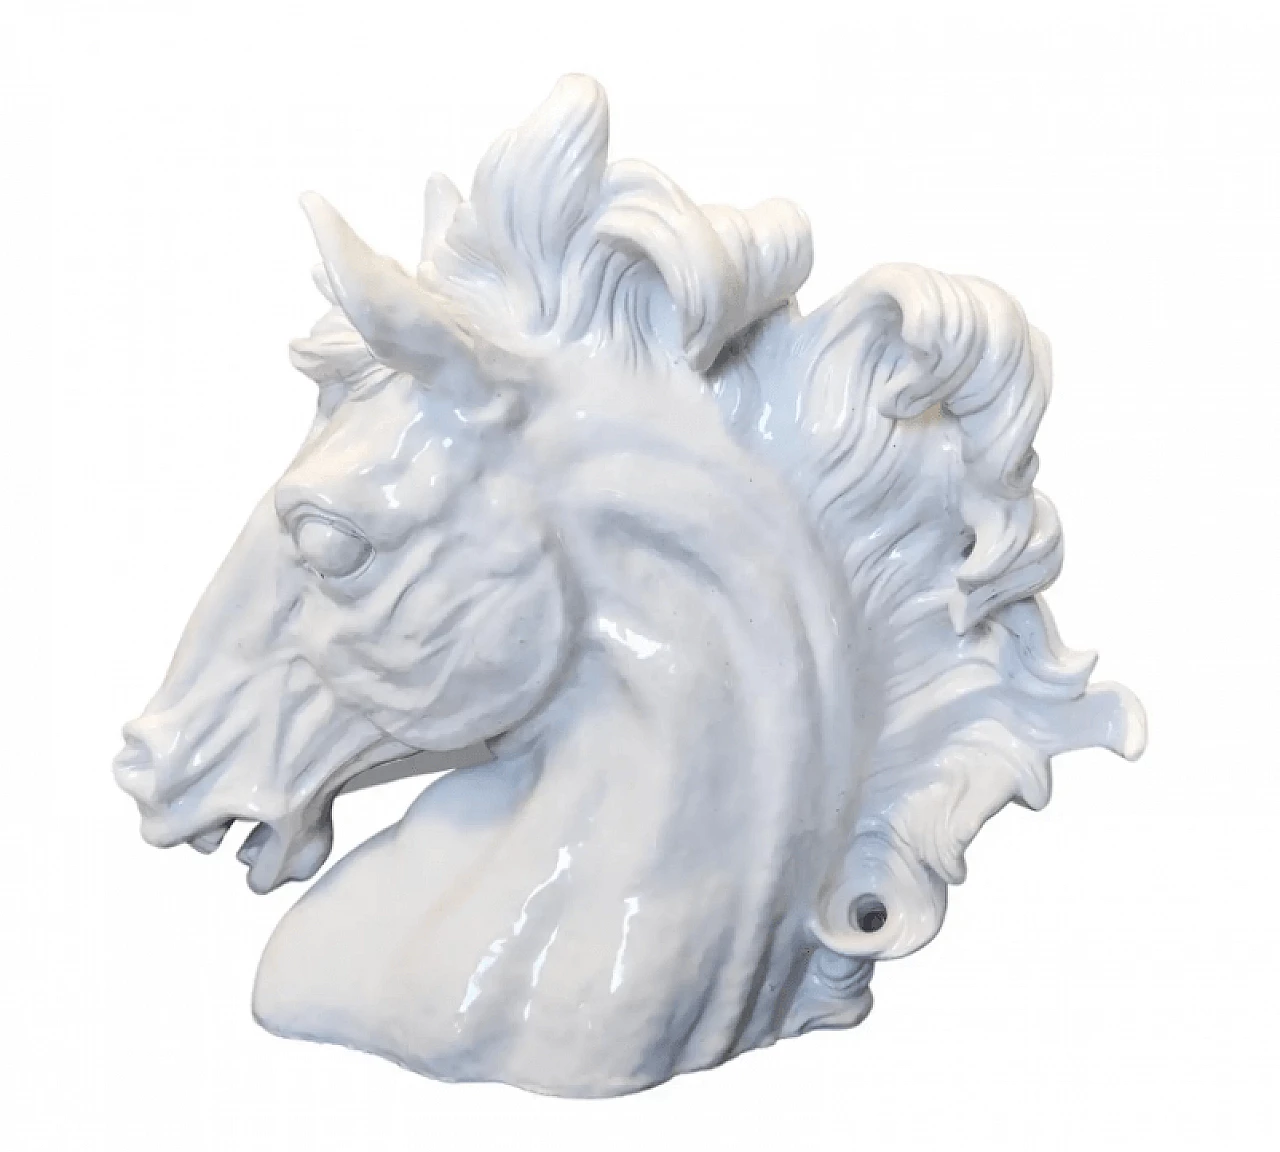 Sculpture depicting a terracotta horse's head, 1980s 1